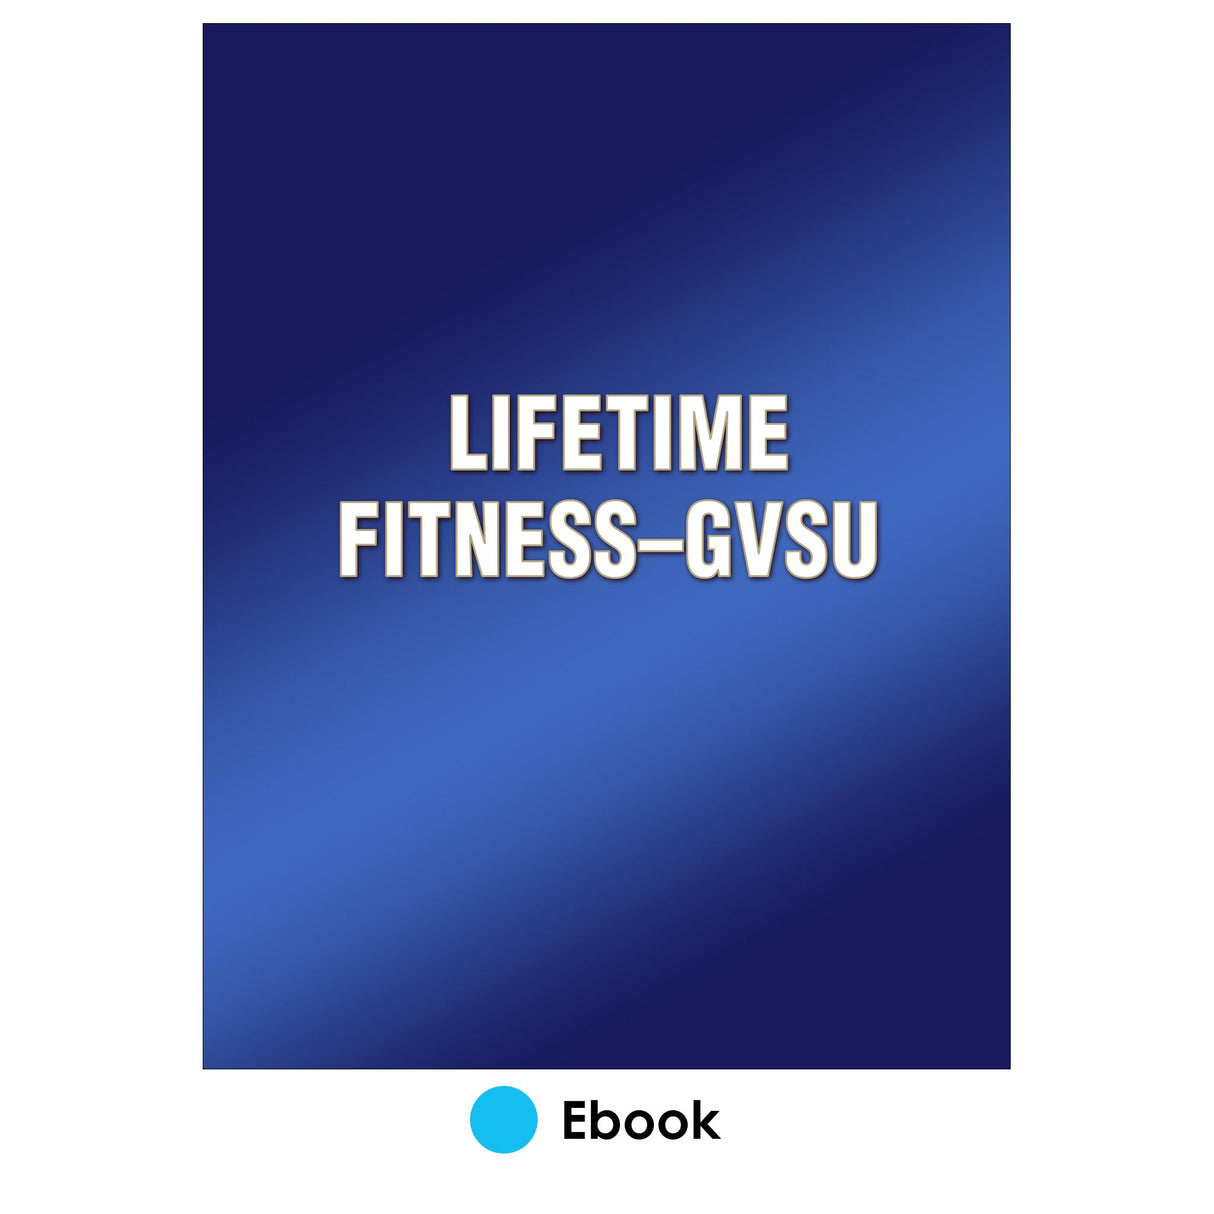 Lifetime Fitness-GVSU